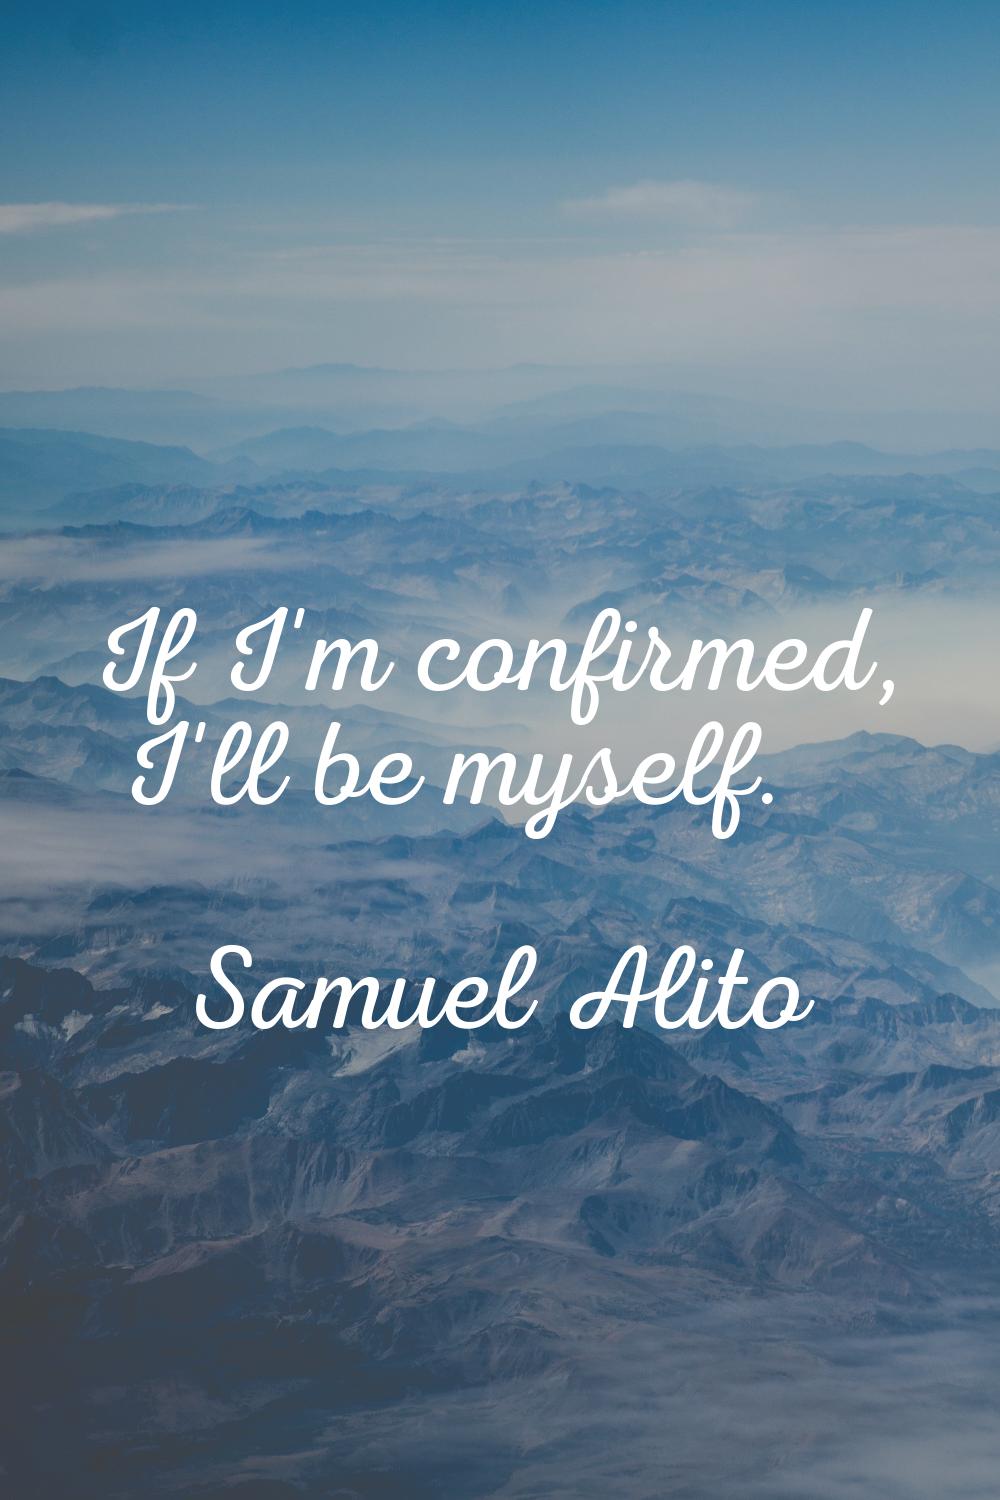 If I'm confirmed, I'll be myself.